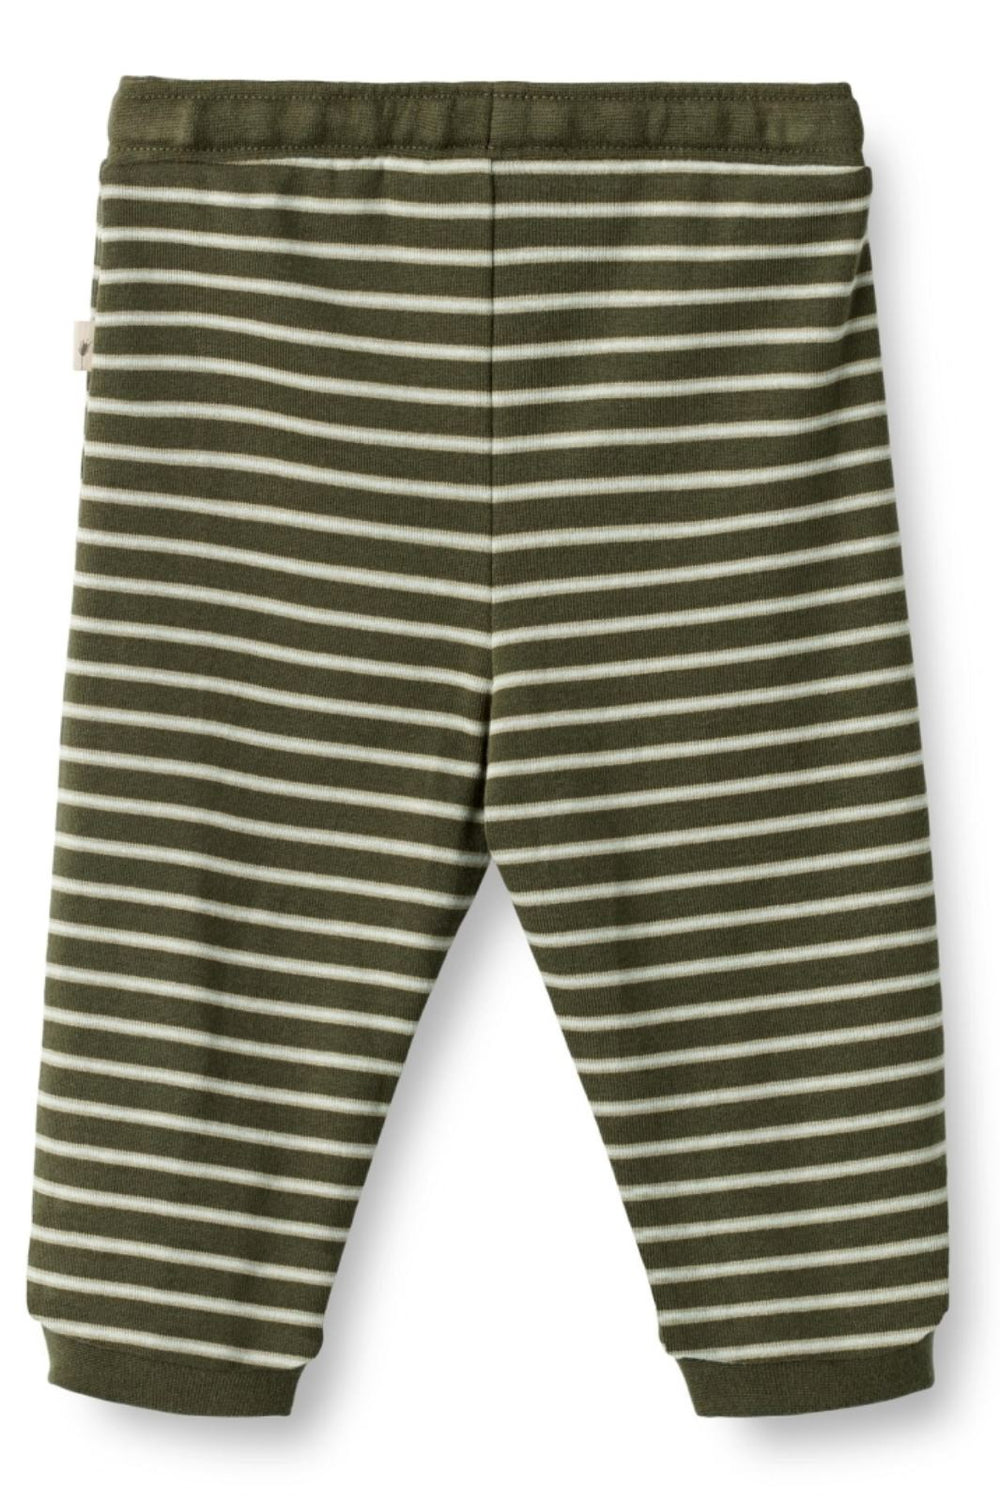 Wheat - Soft Pants Leo - 4076 dark green stripe Sweatpants 